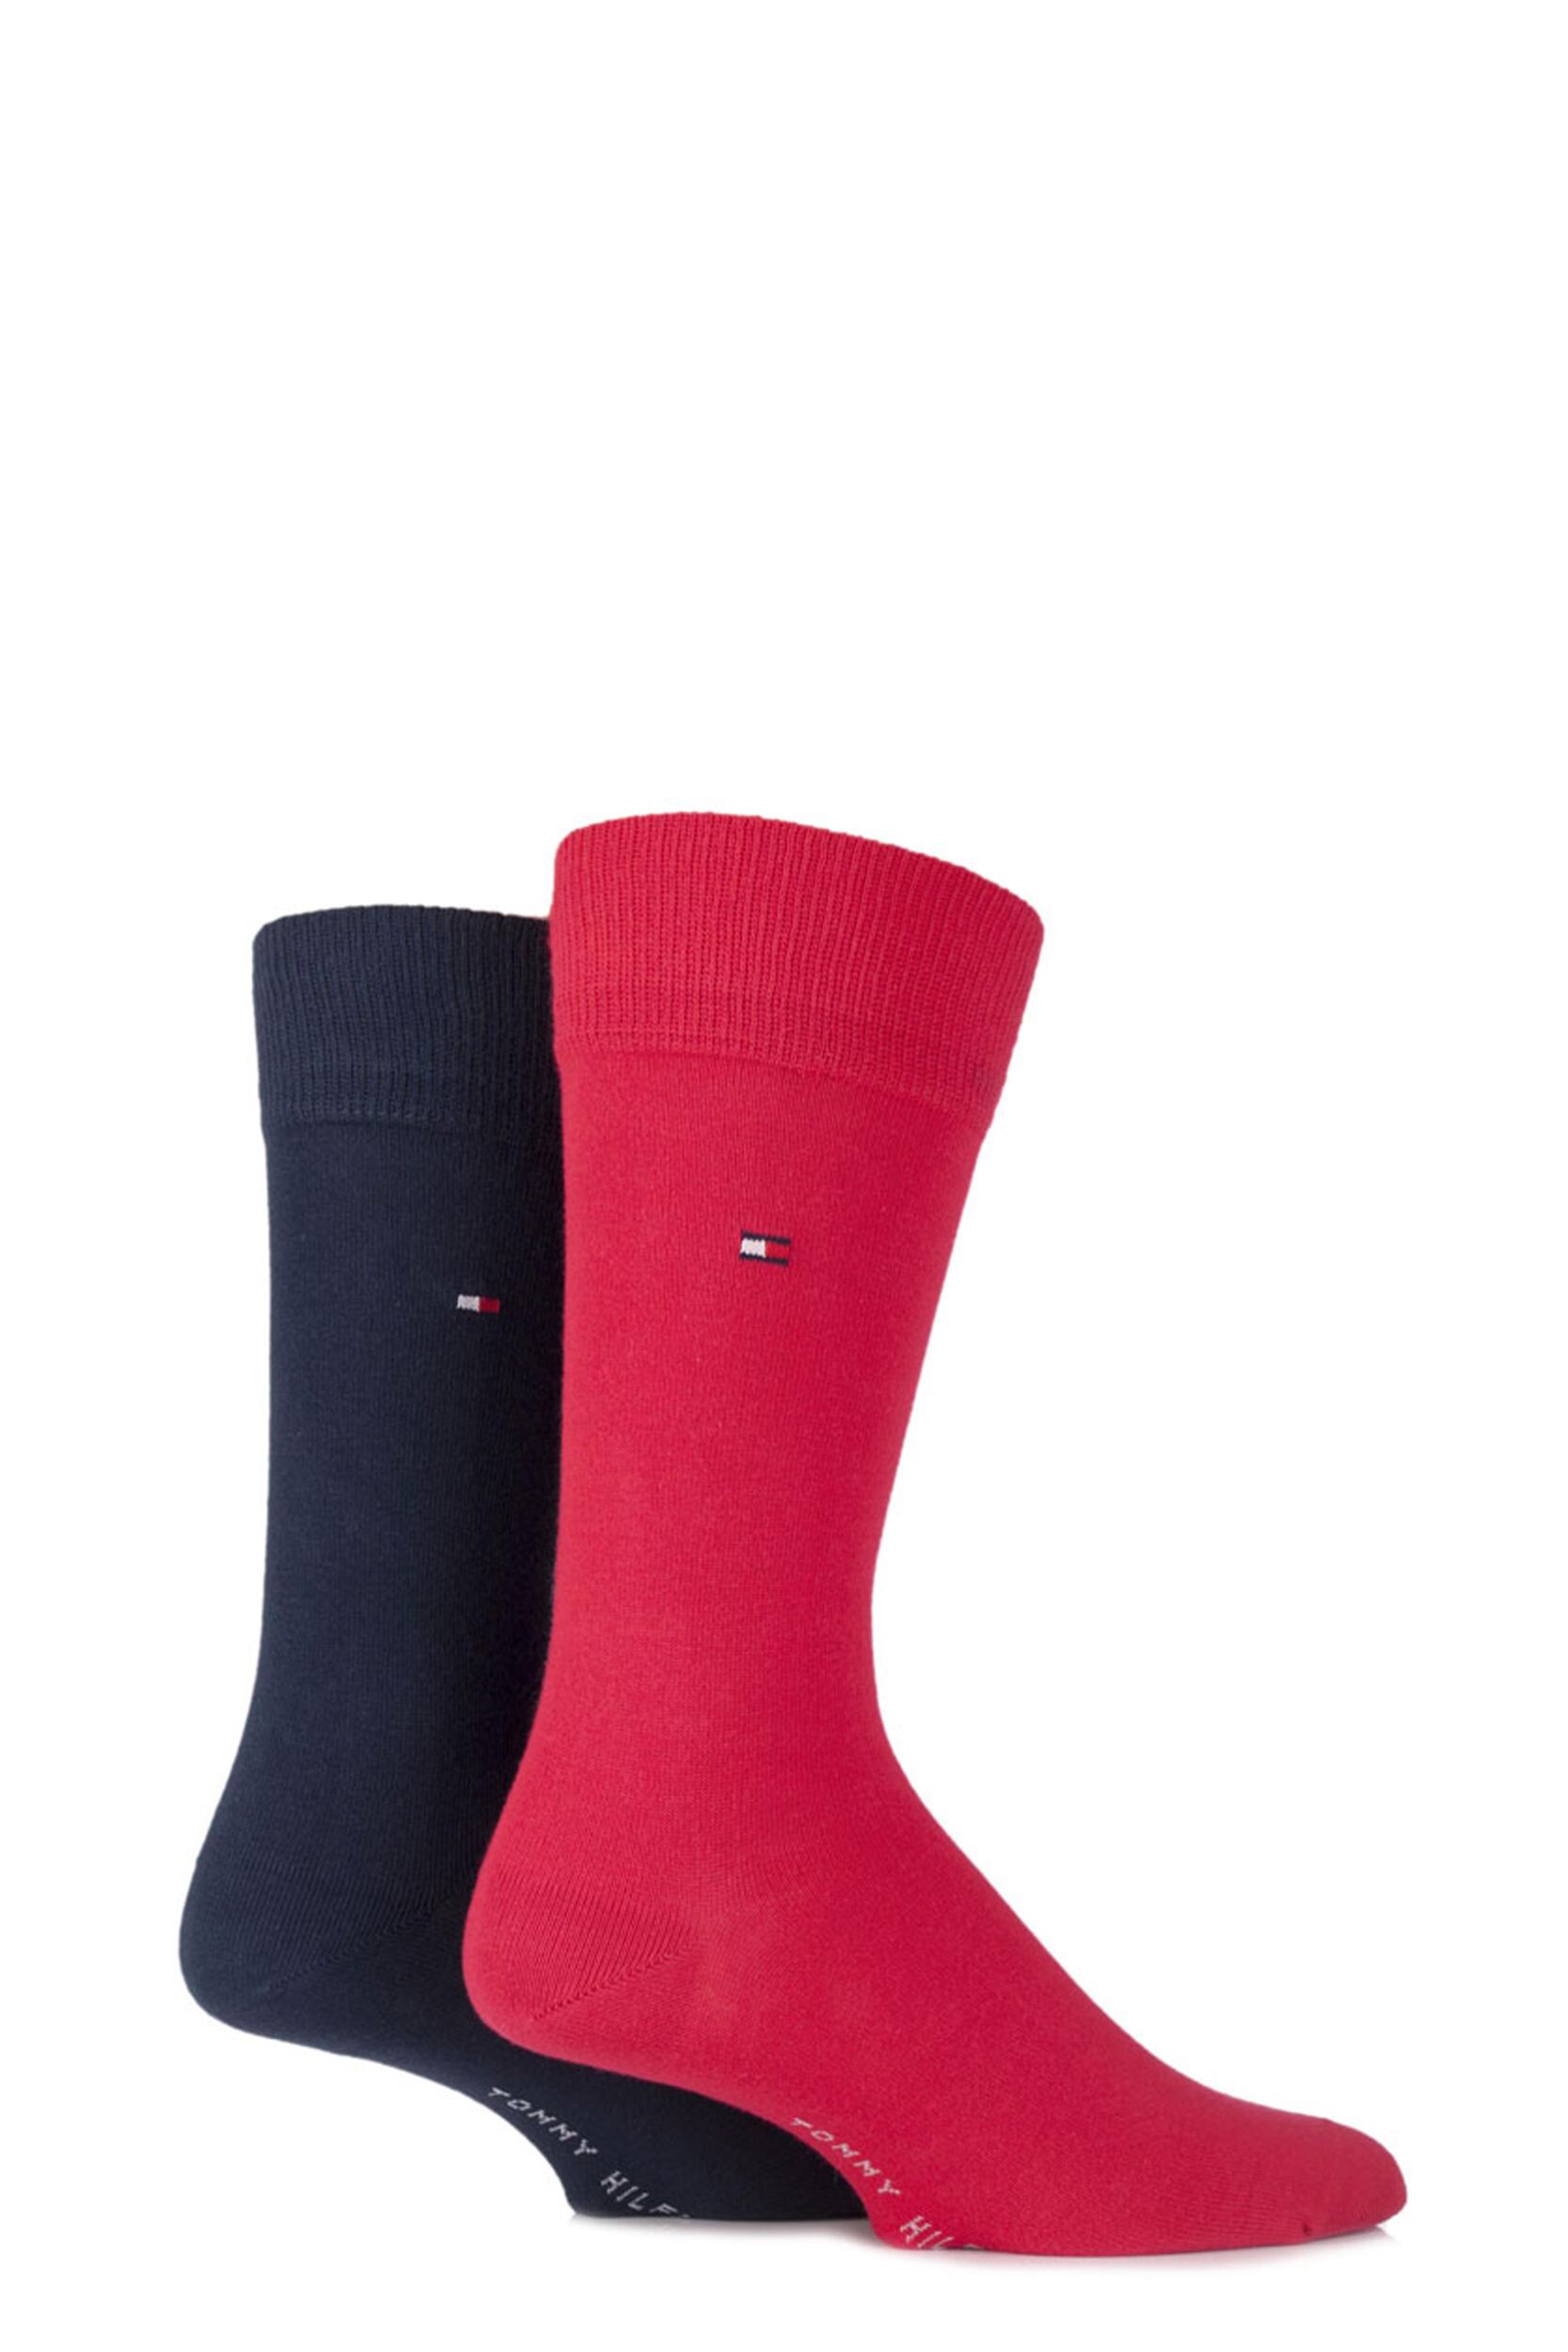 Mens 2 Pair Tommy Hilfiger Classic Plain Cotton Socks | eBay